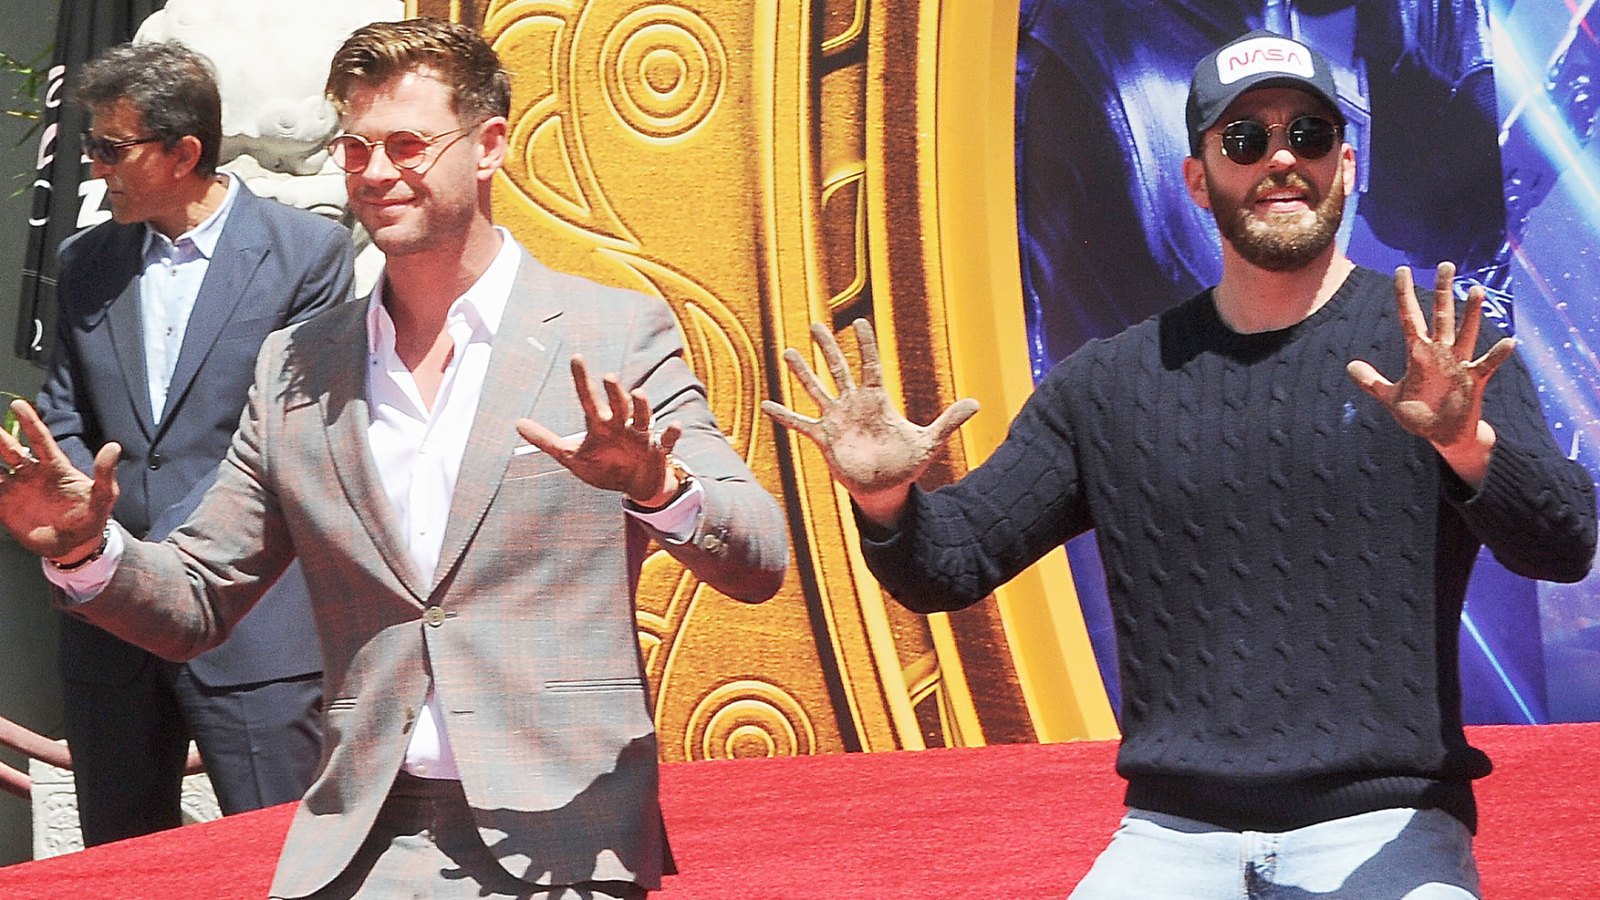 Chris Hemsworth and Chris Evans attend Marvel Studios' "Avengers: Endgame" Cast Place Their Hand Prints